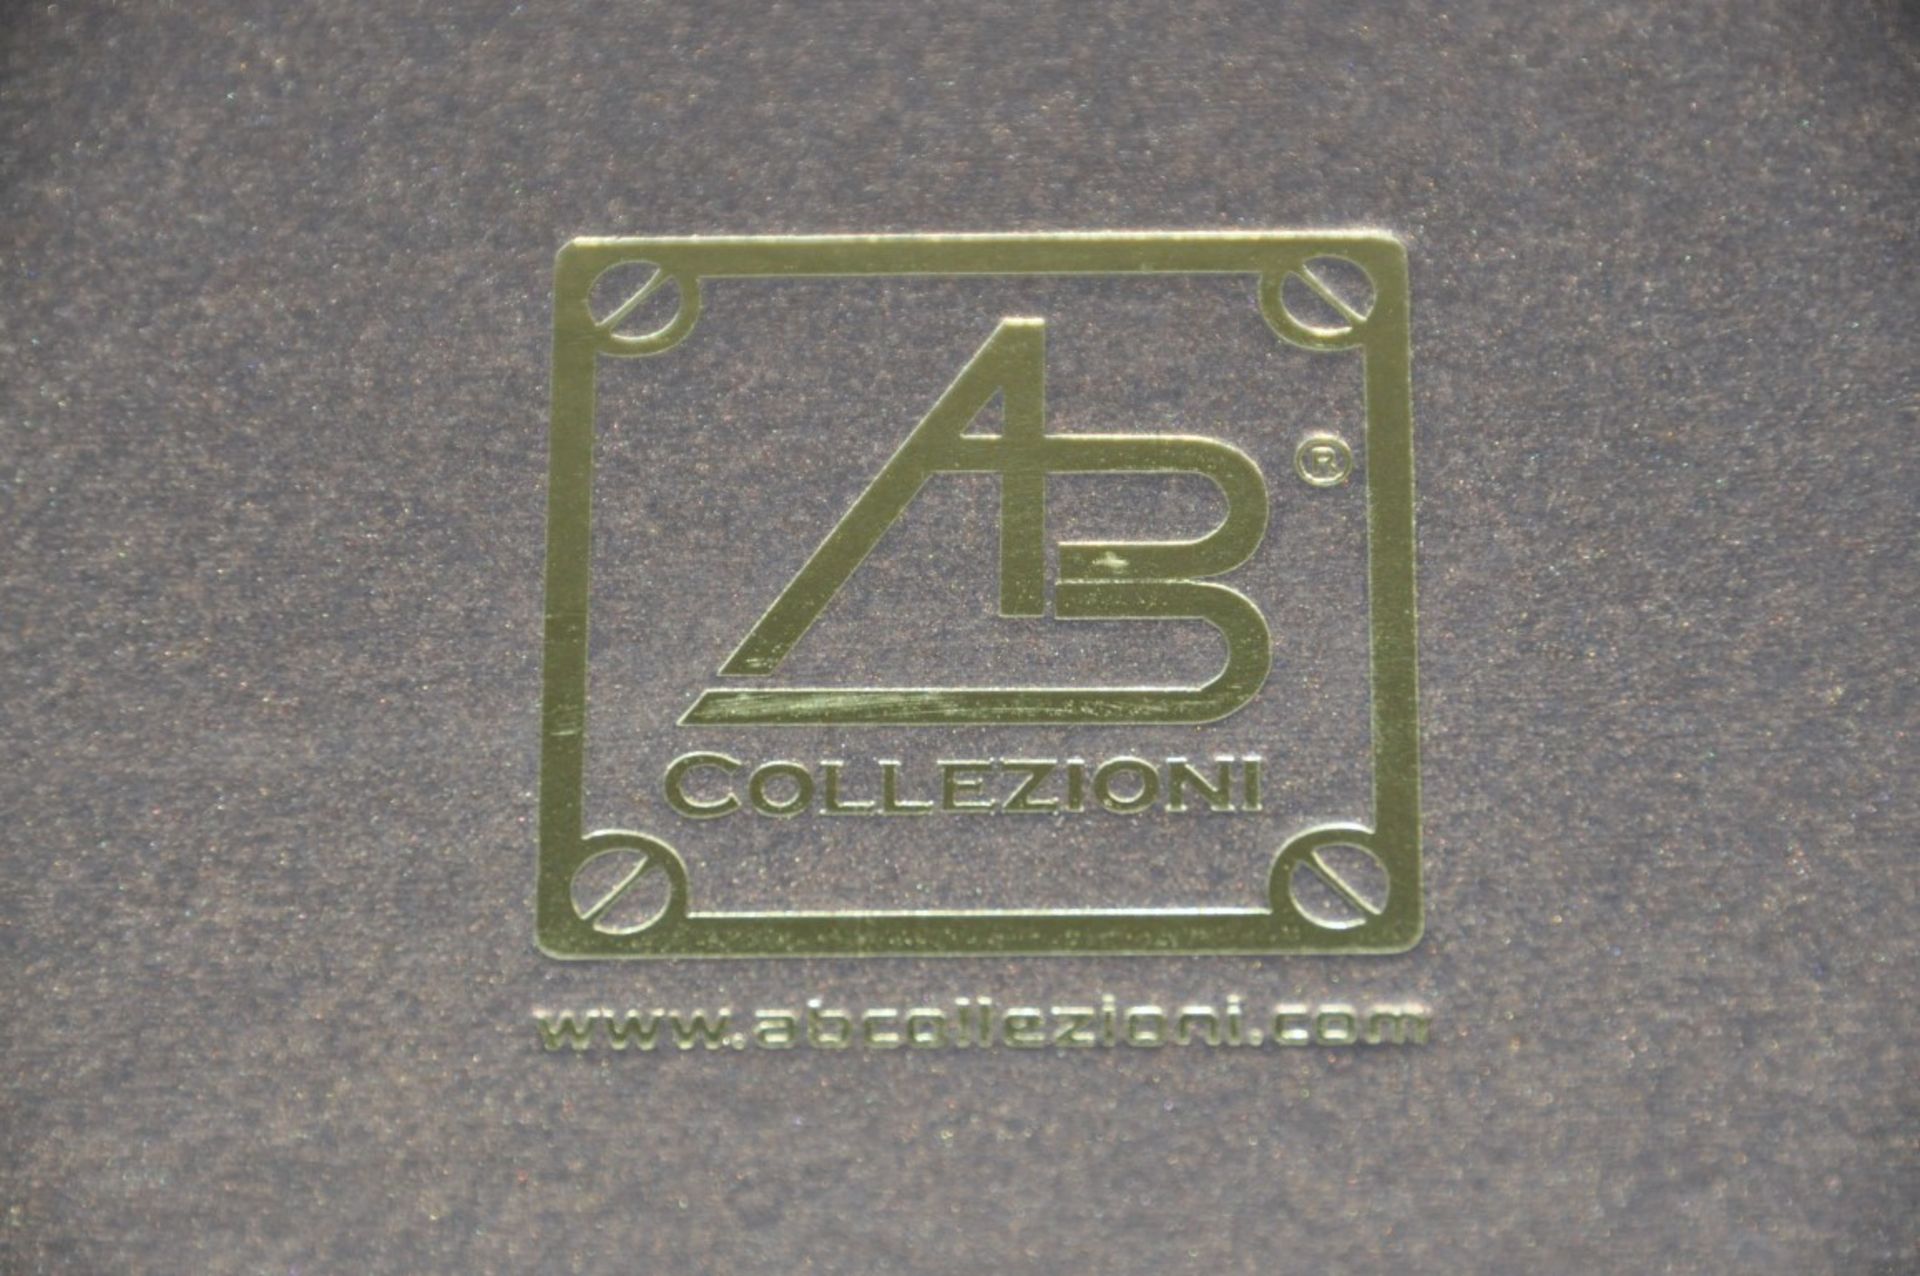 1 x "AB Collezioni" Italian Genuine Leather-Bound Luxury POKER SET (34048) - Features Beautiful - Image 4 of 8